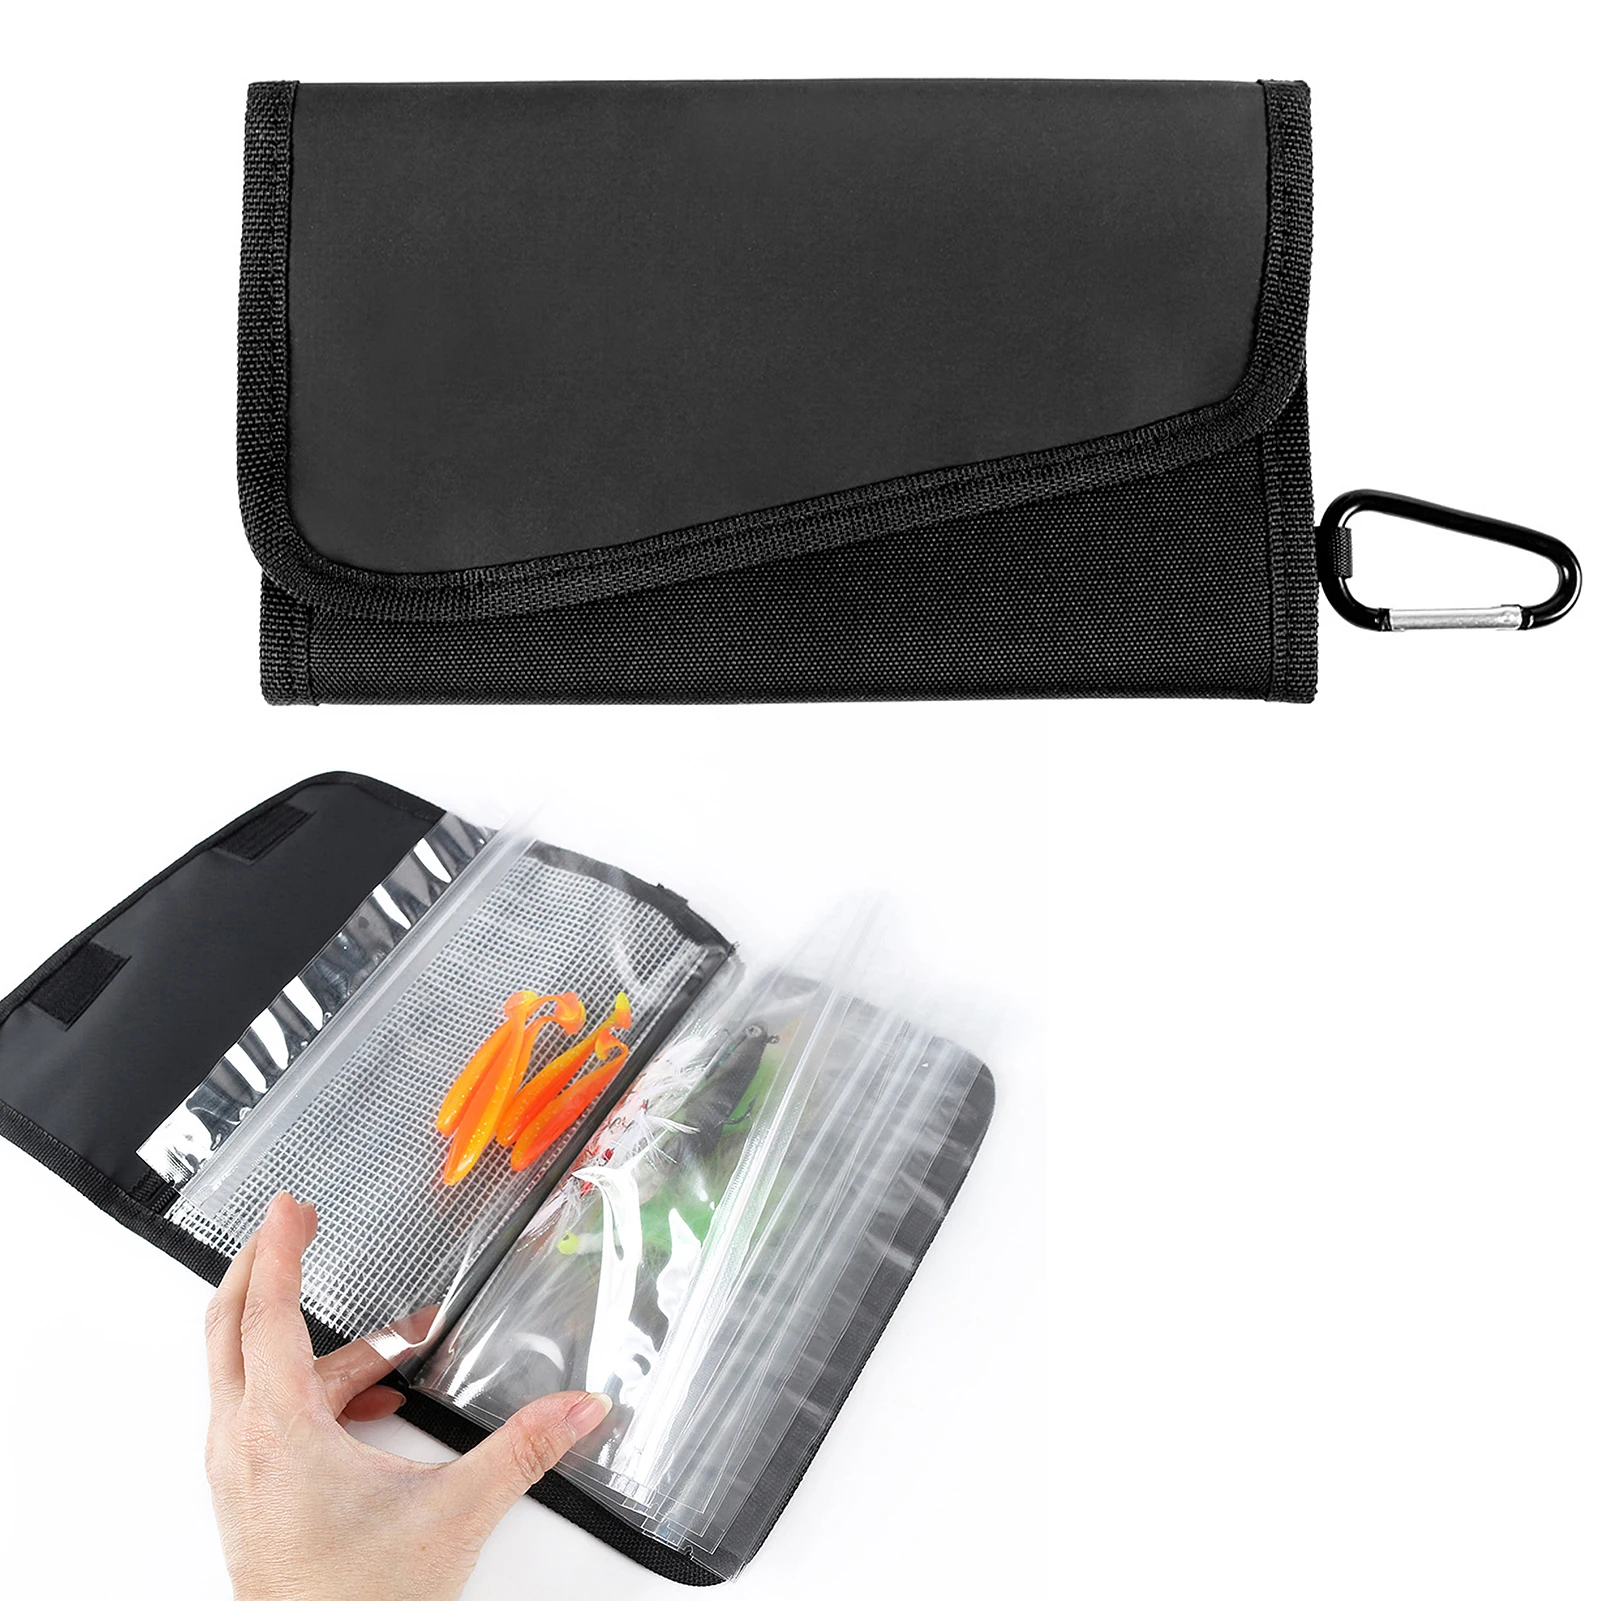 10” X8.5” x 2” soft bait binder bag fishing lure storage wallet